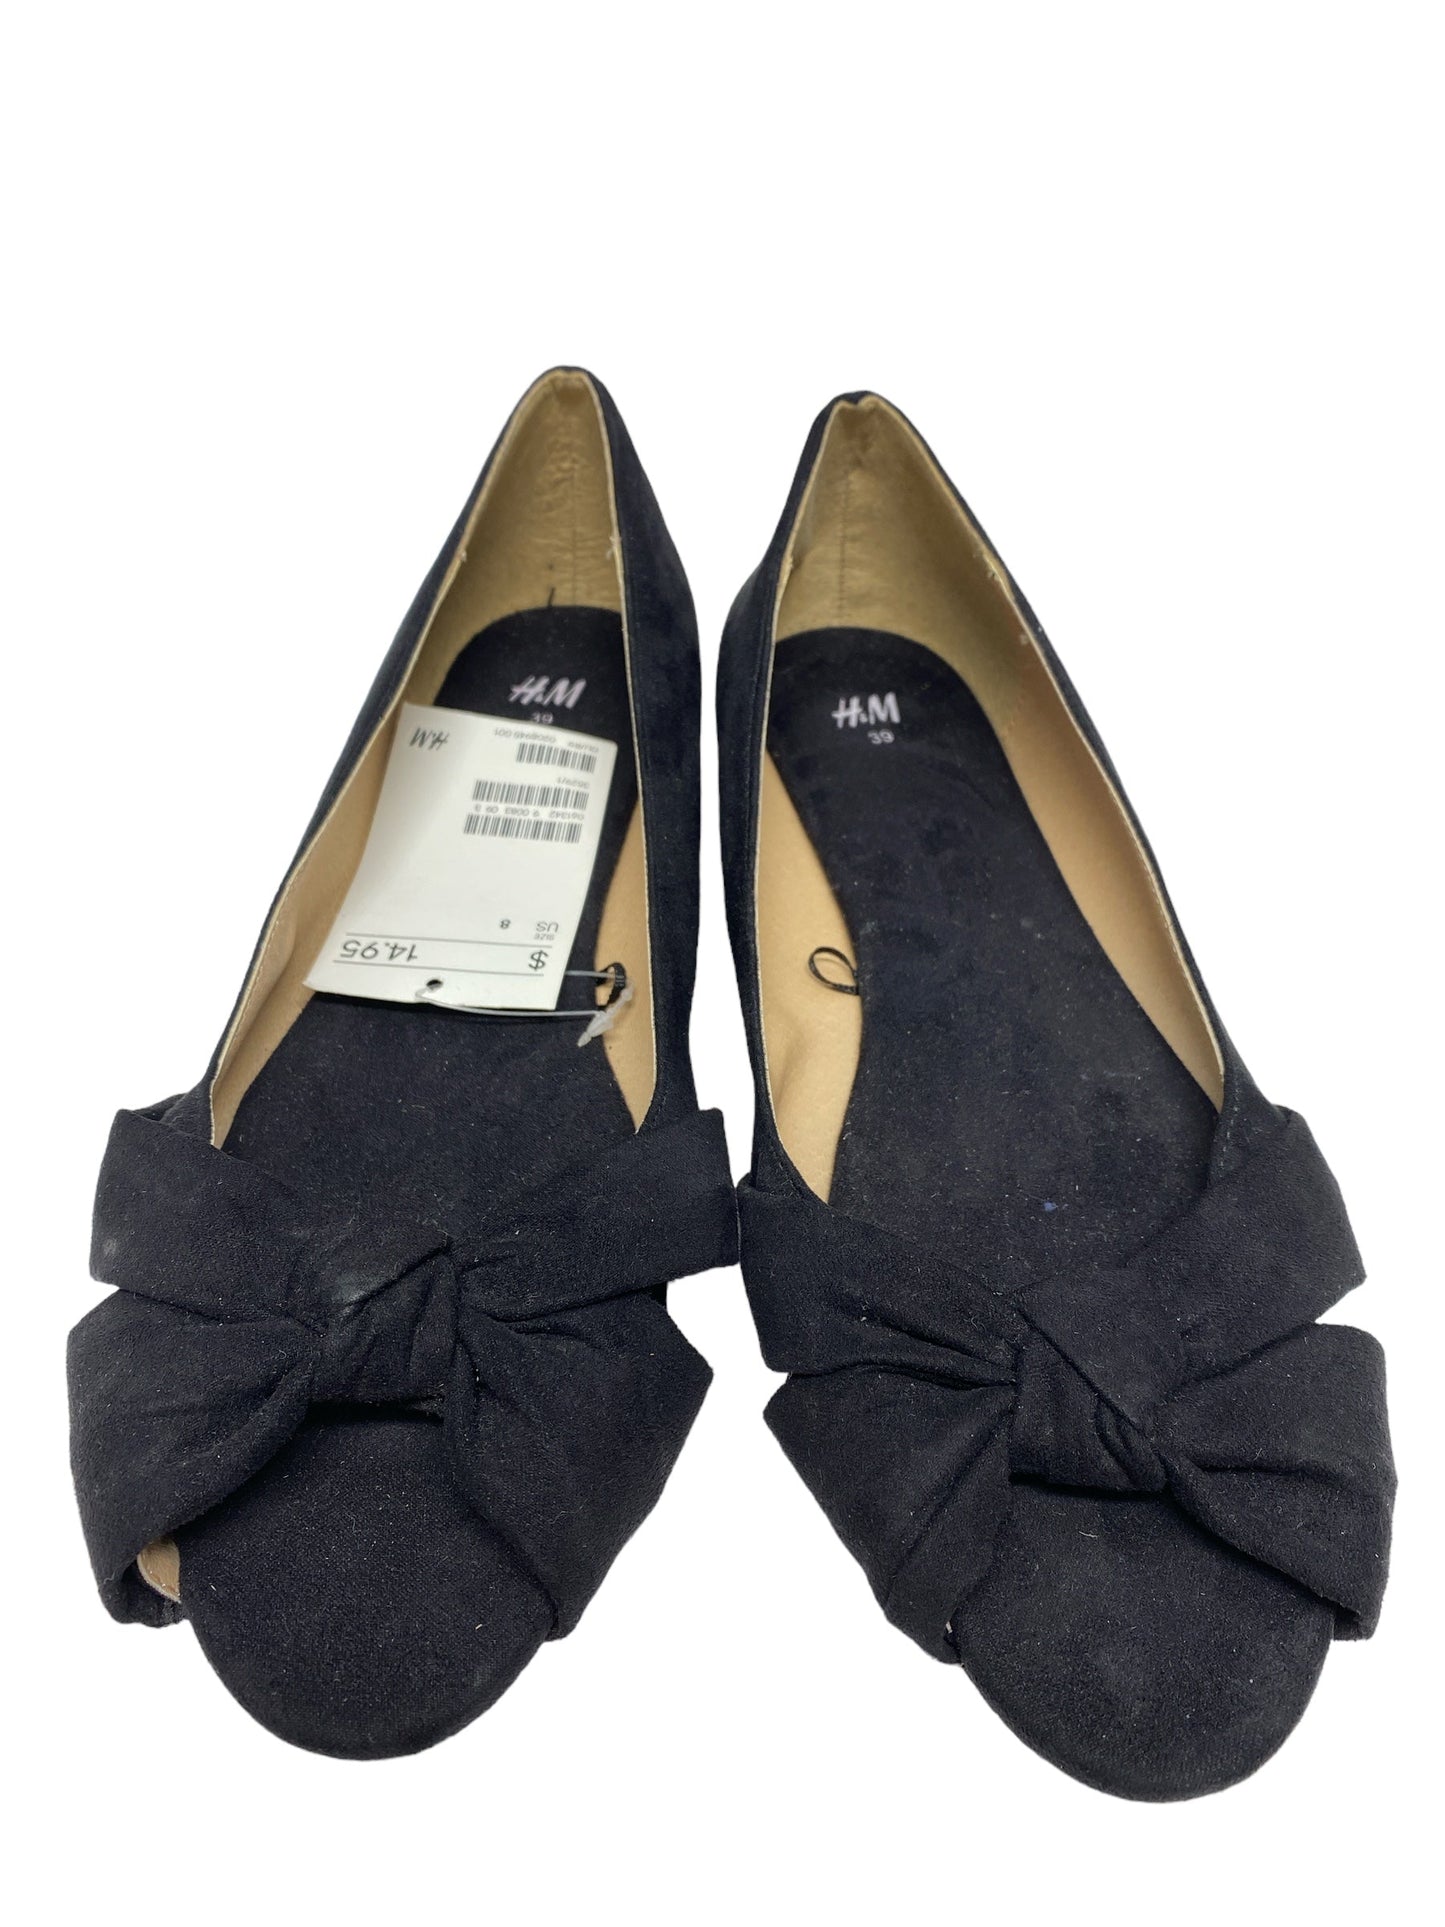 Shoes Flats Ballet By H&m  Size: 8